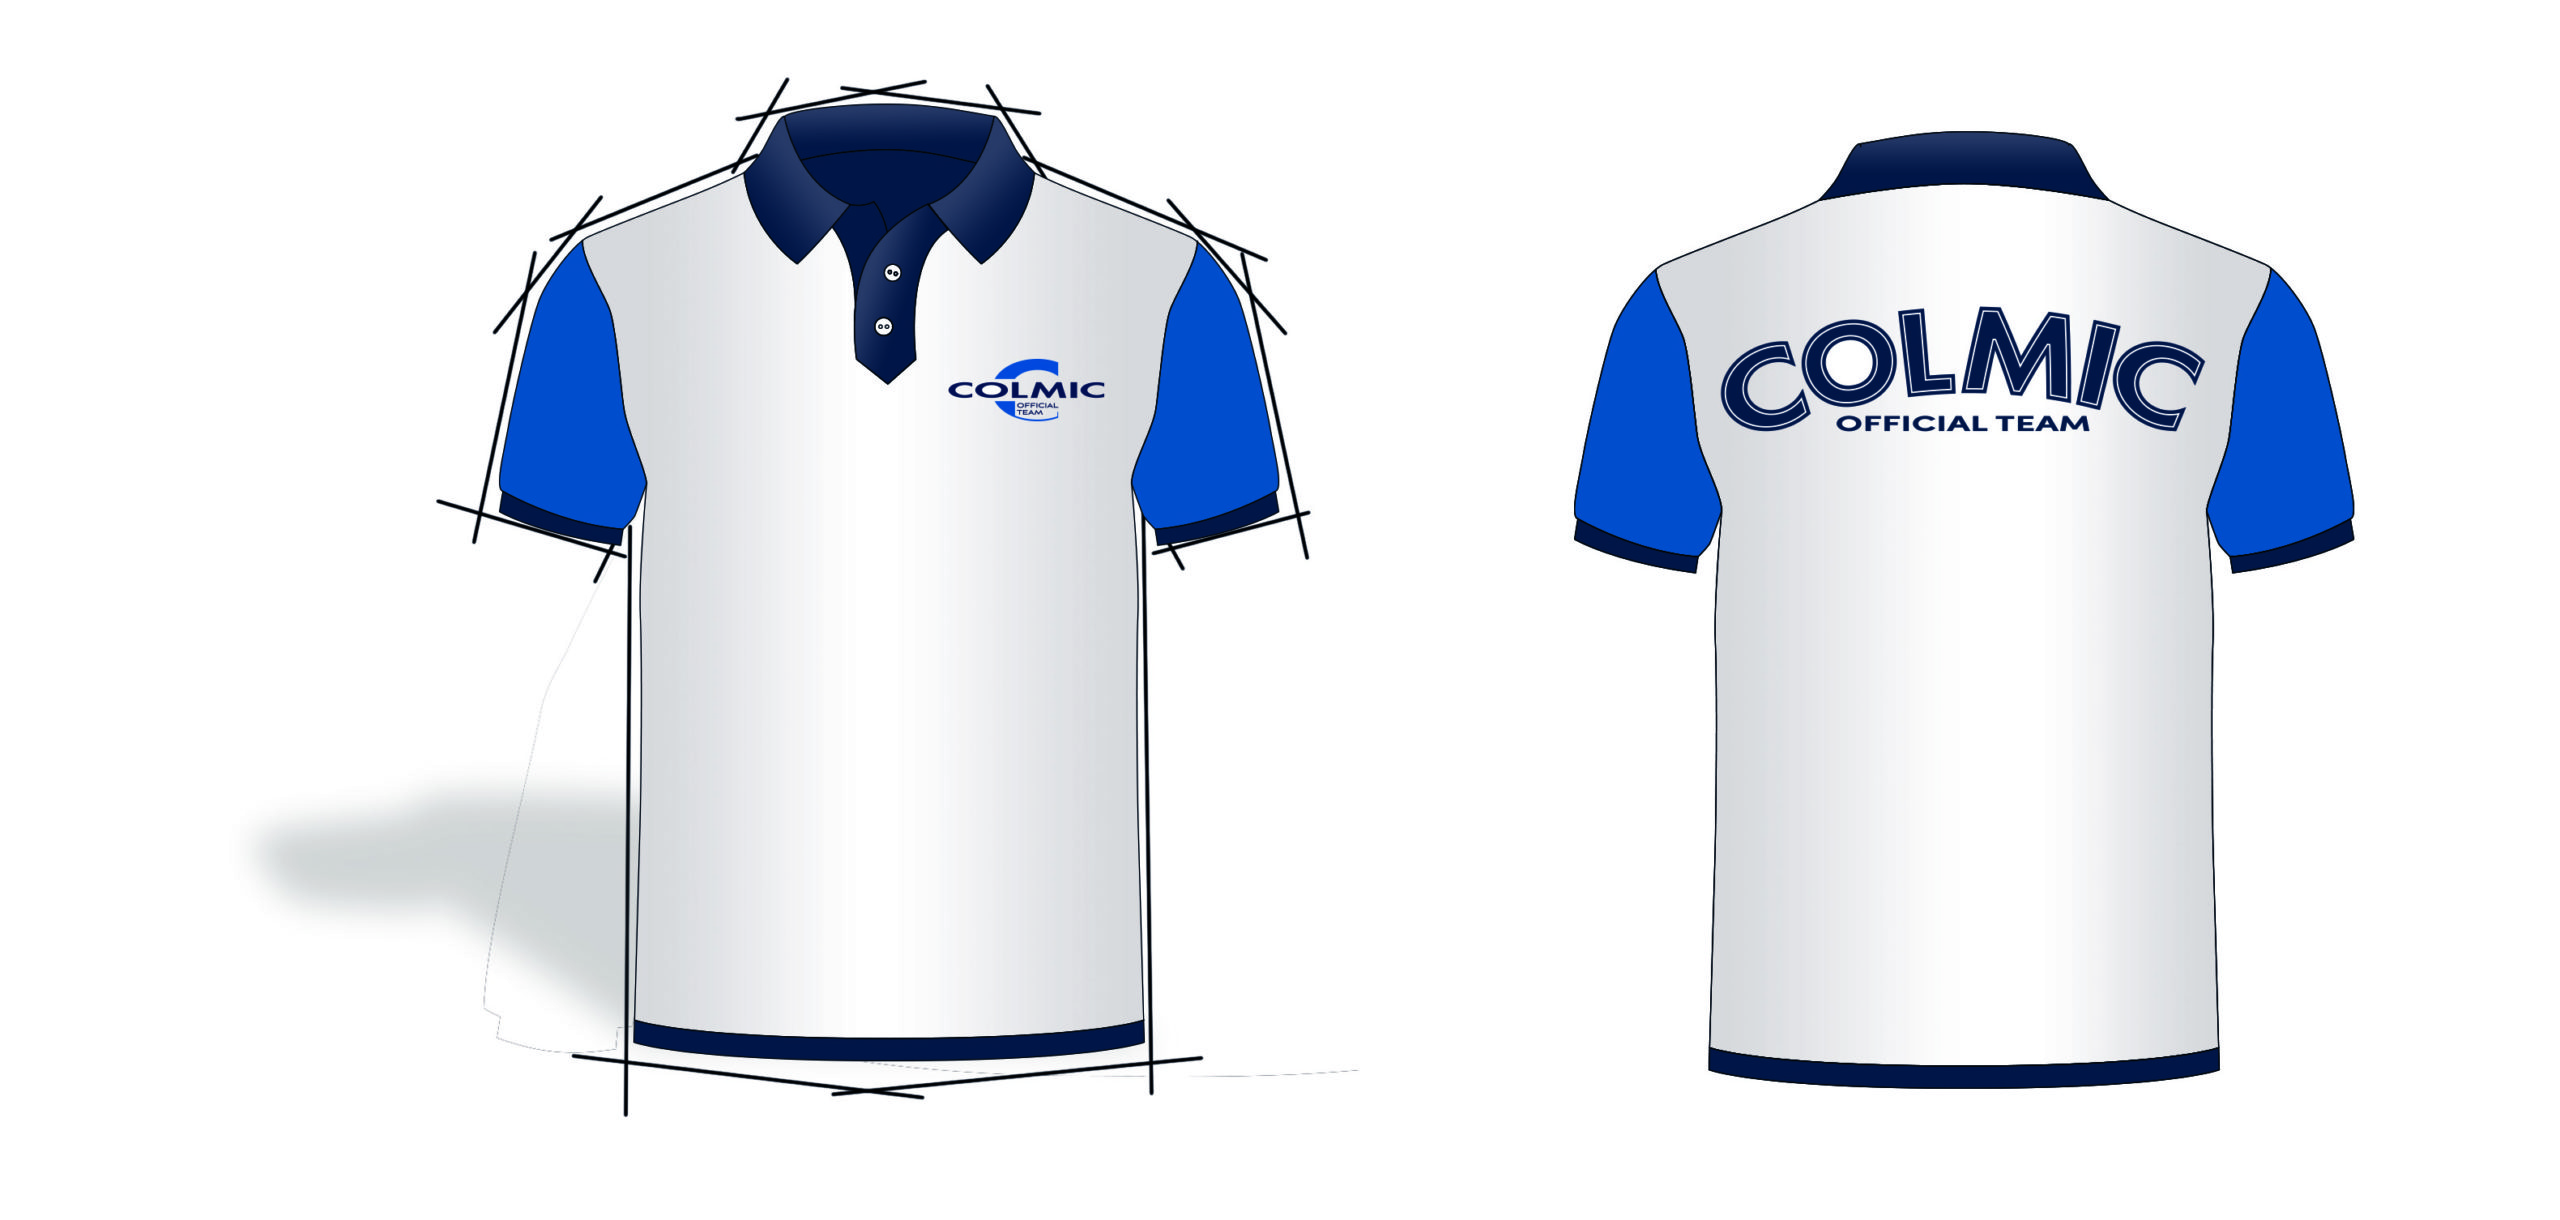 Colmic Abbigliamento Polo cotone Blu Official Team pesca New collection CSP 